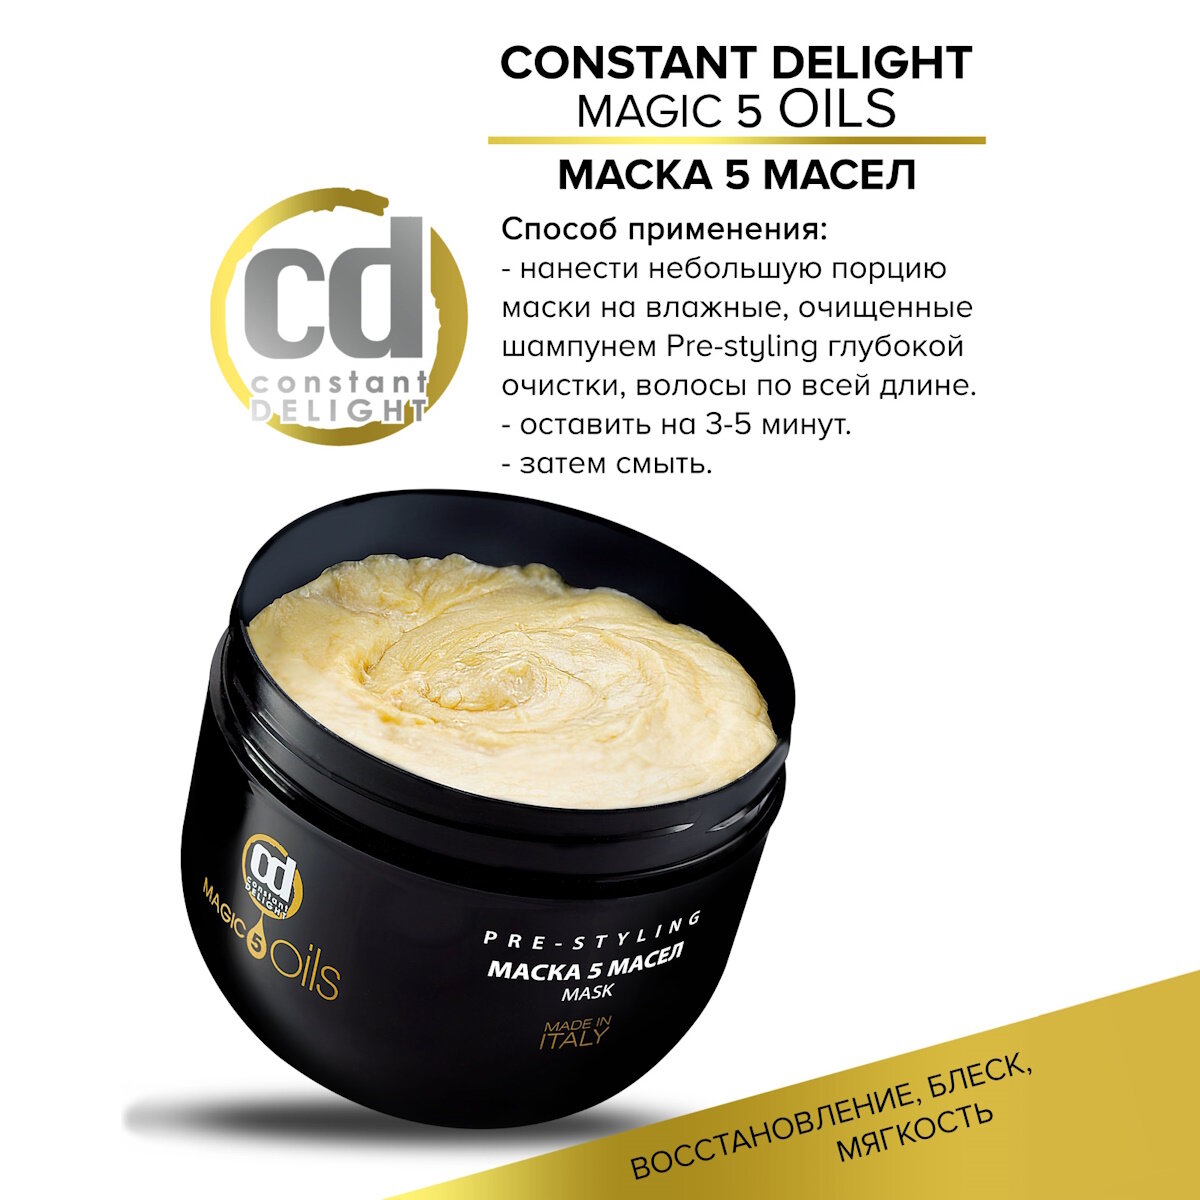 Constant Delight 5 Magic Oils Маска для всех типов волос, 500 мл, банка